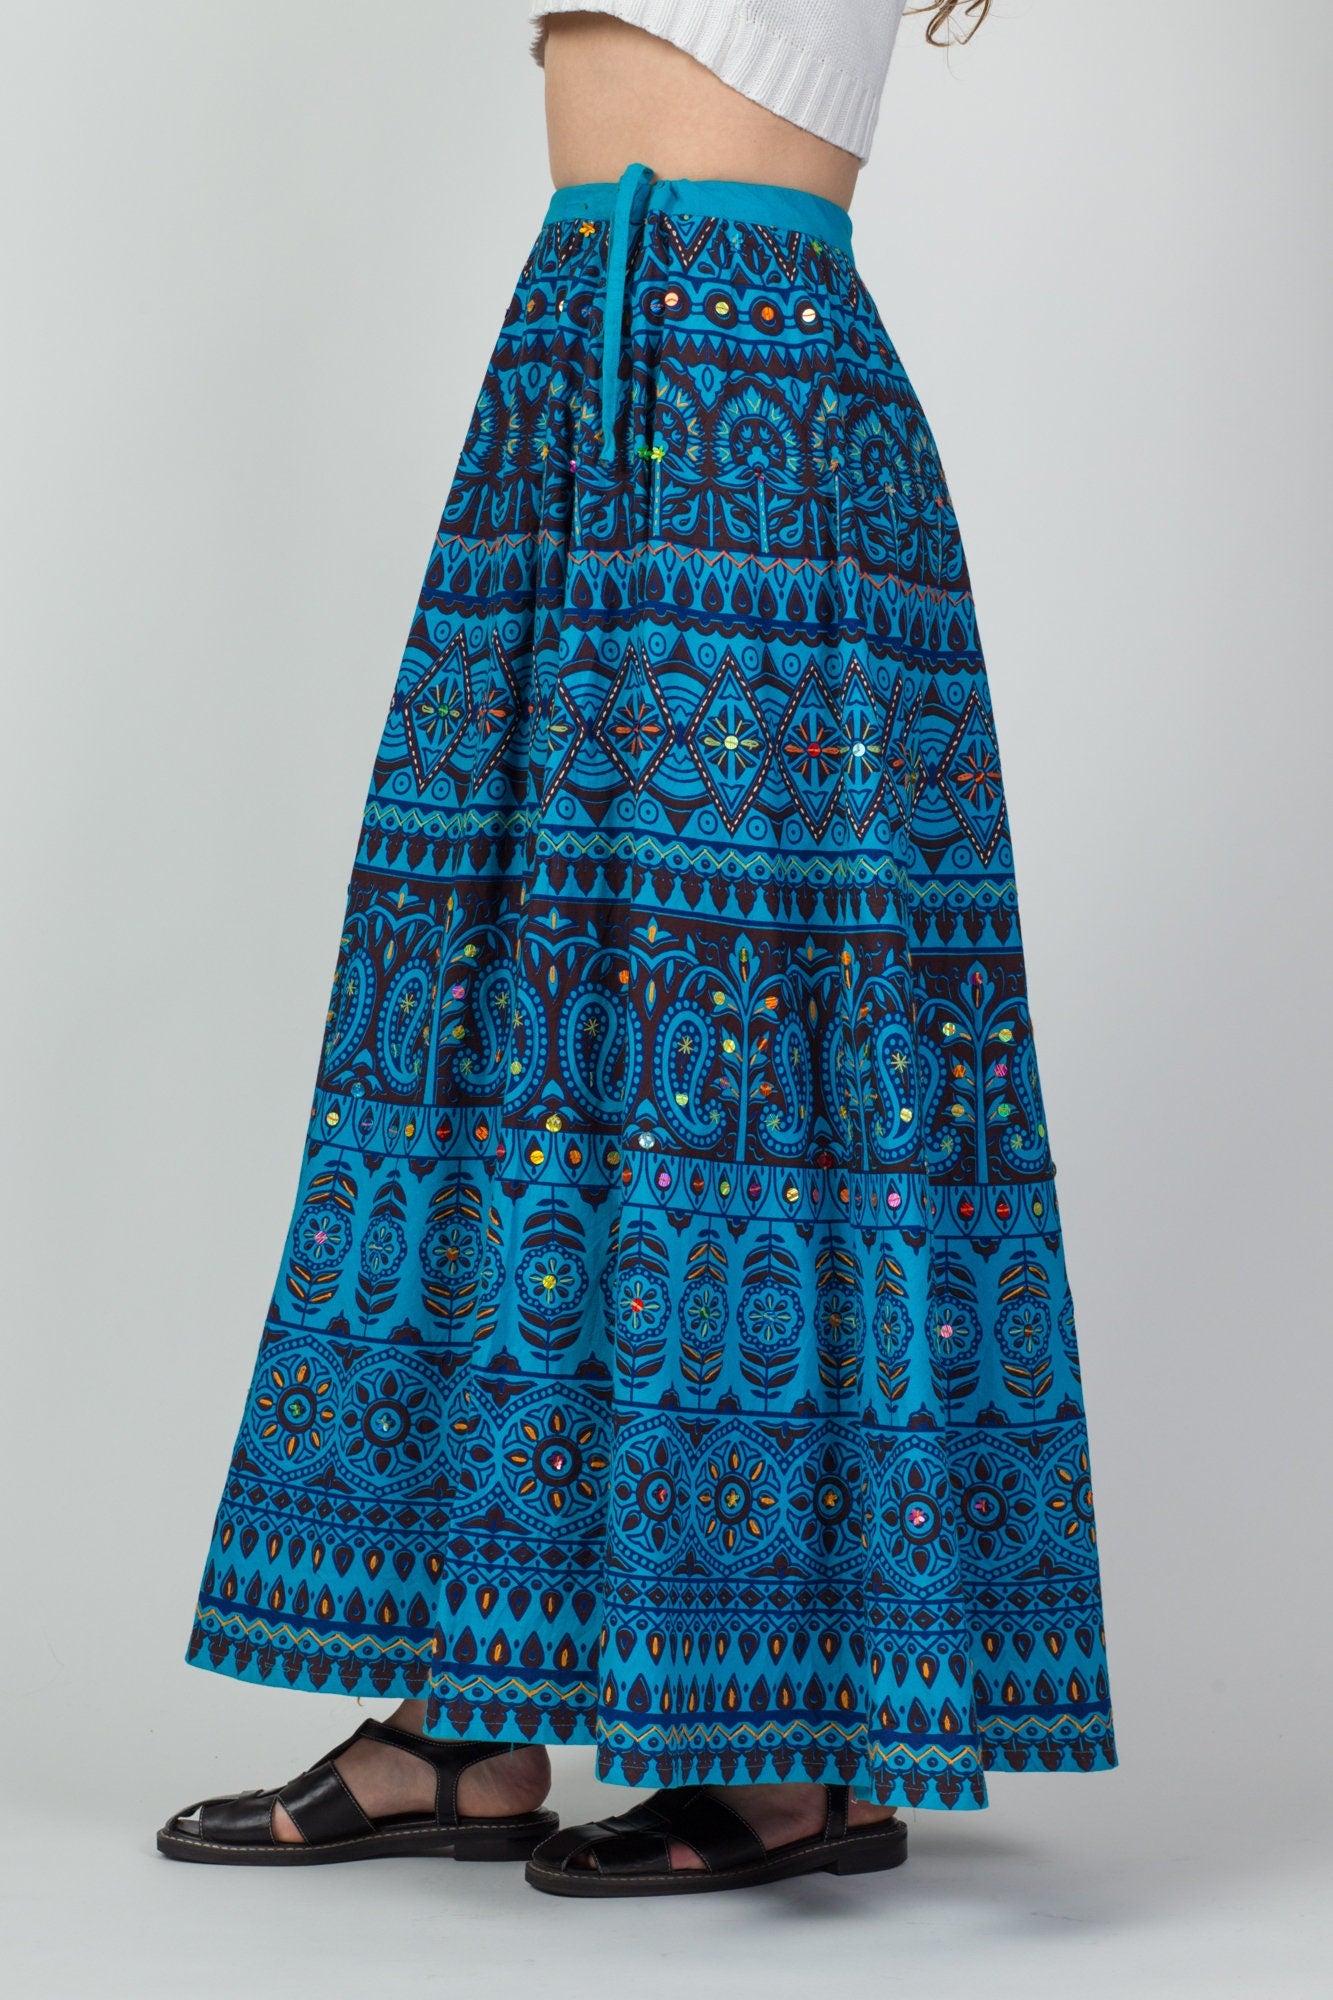 Vintage 70s Blue Indian Block Print Skirt - Small to Medium 